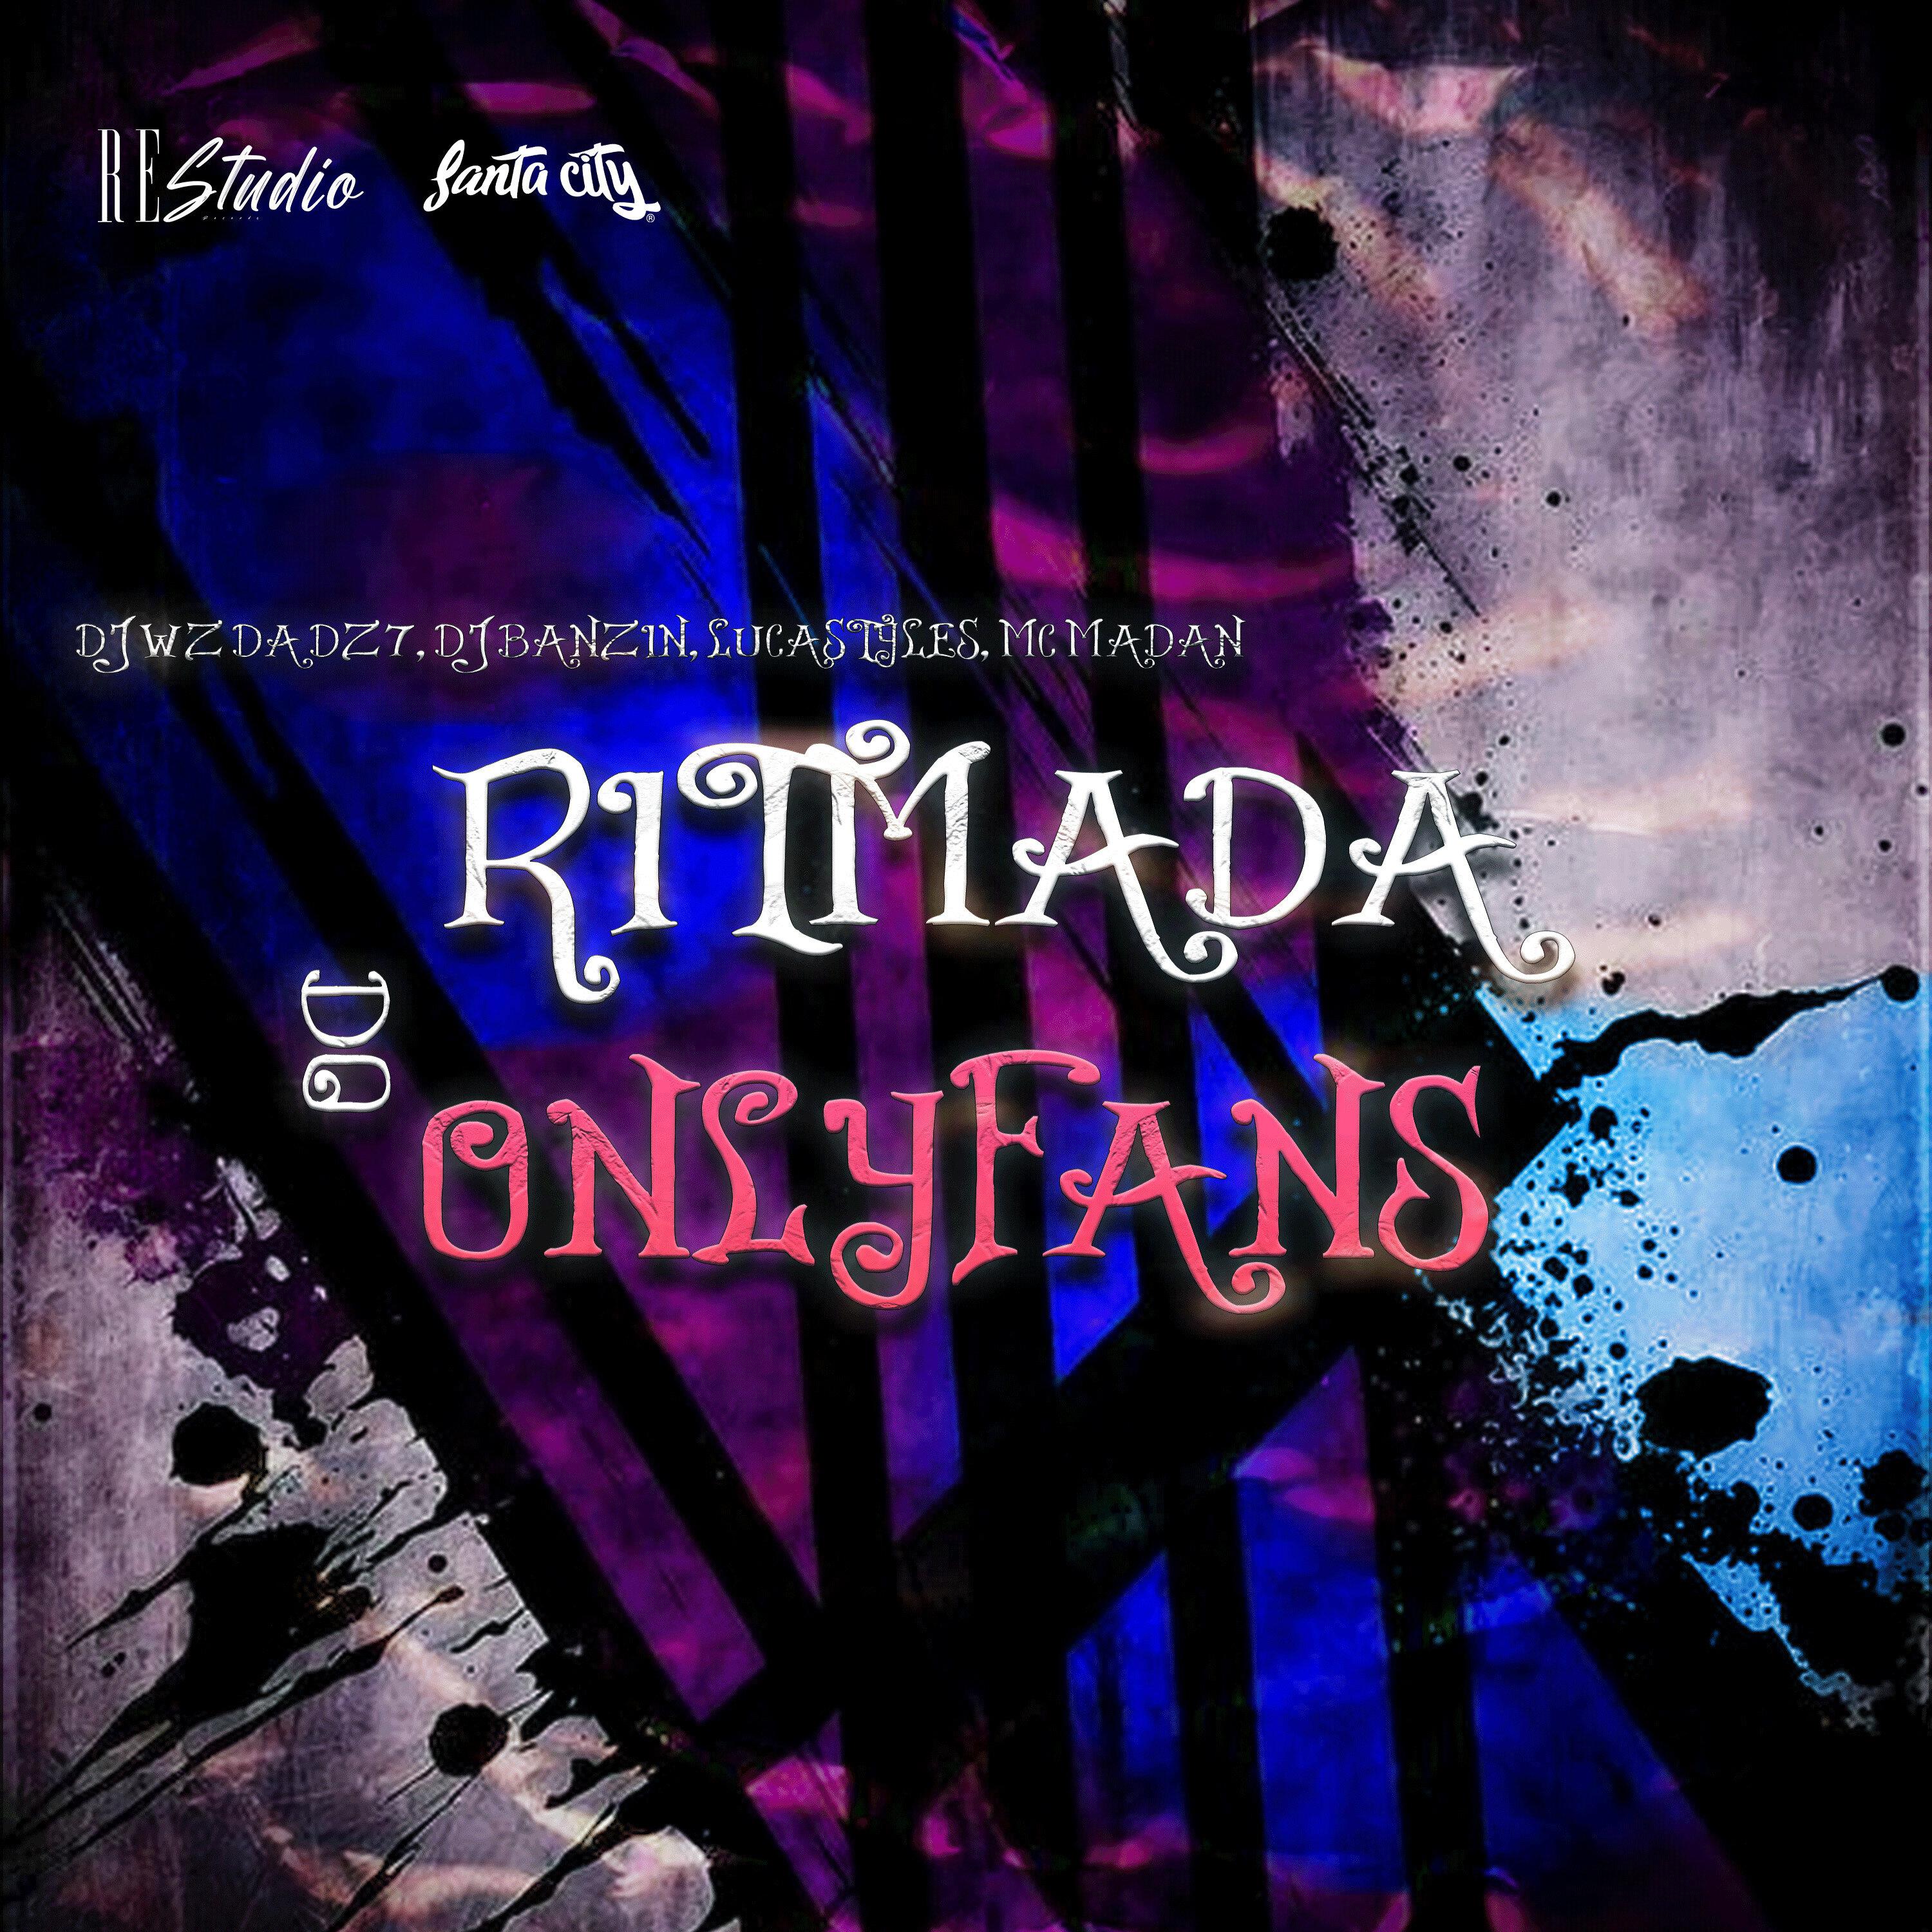 DJ BANZIN - Ritmada do Onlyfans (feat. Re Studio & SANTA CITY)